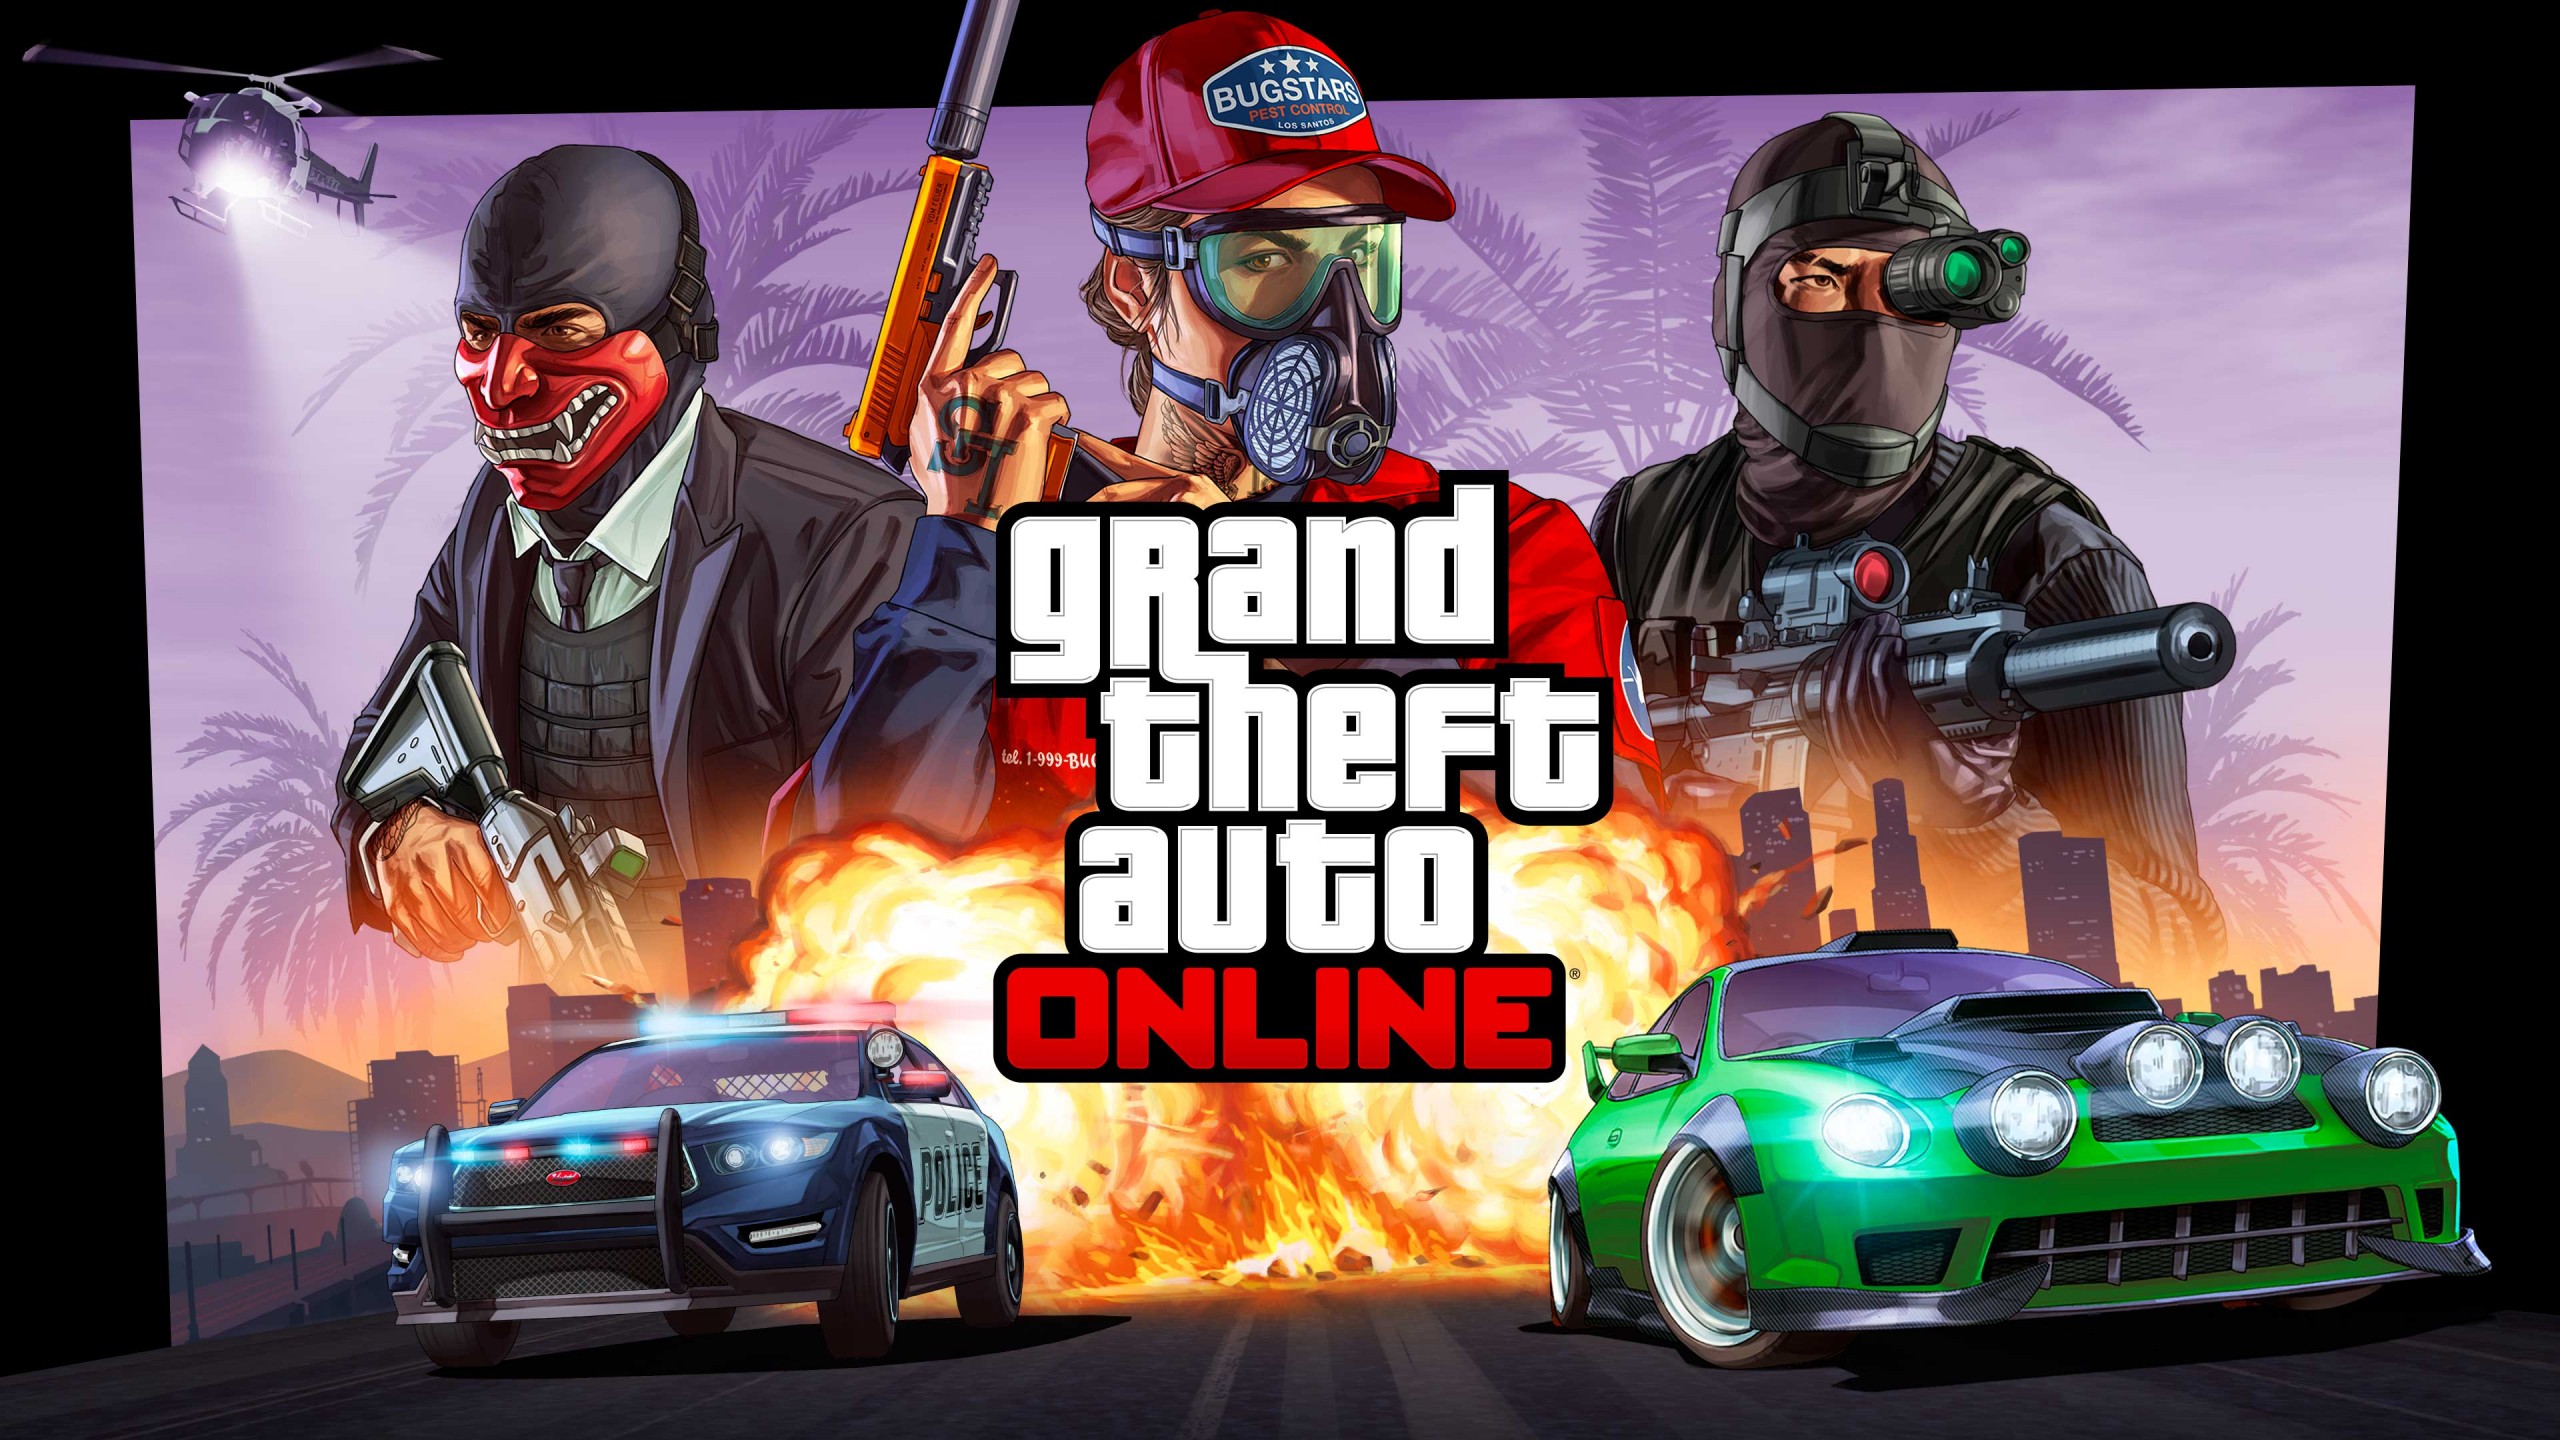 GTA Online Artworks & Wallpaper. Grand Theft Auto V